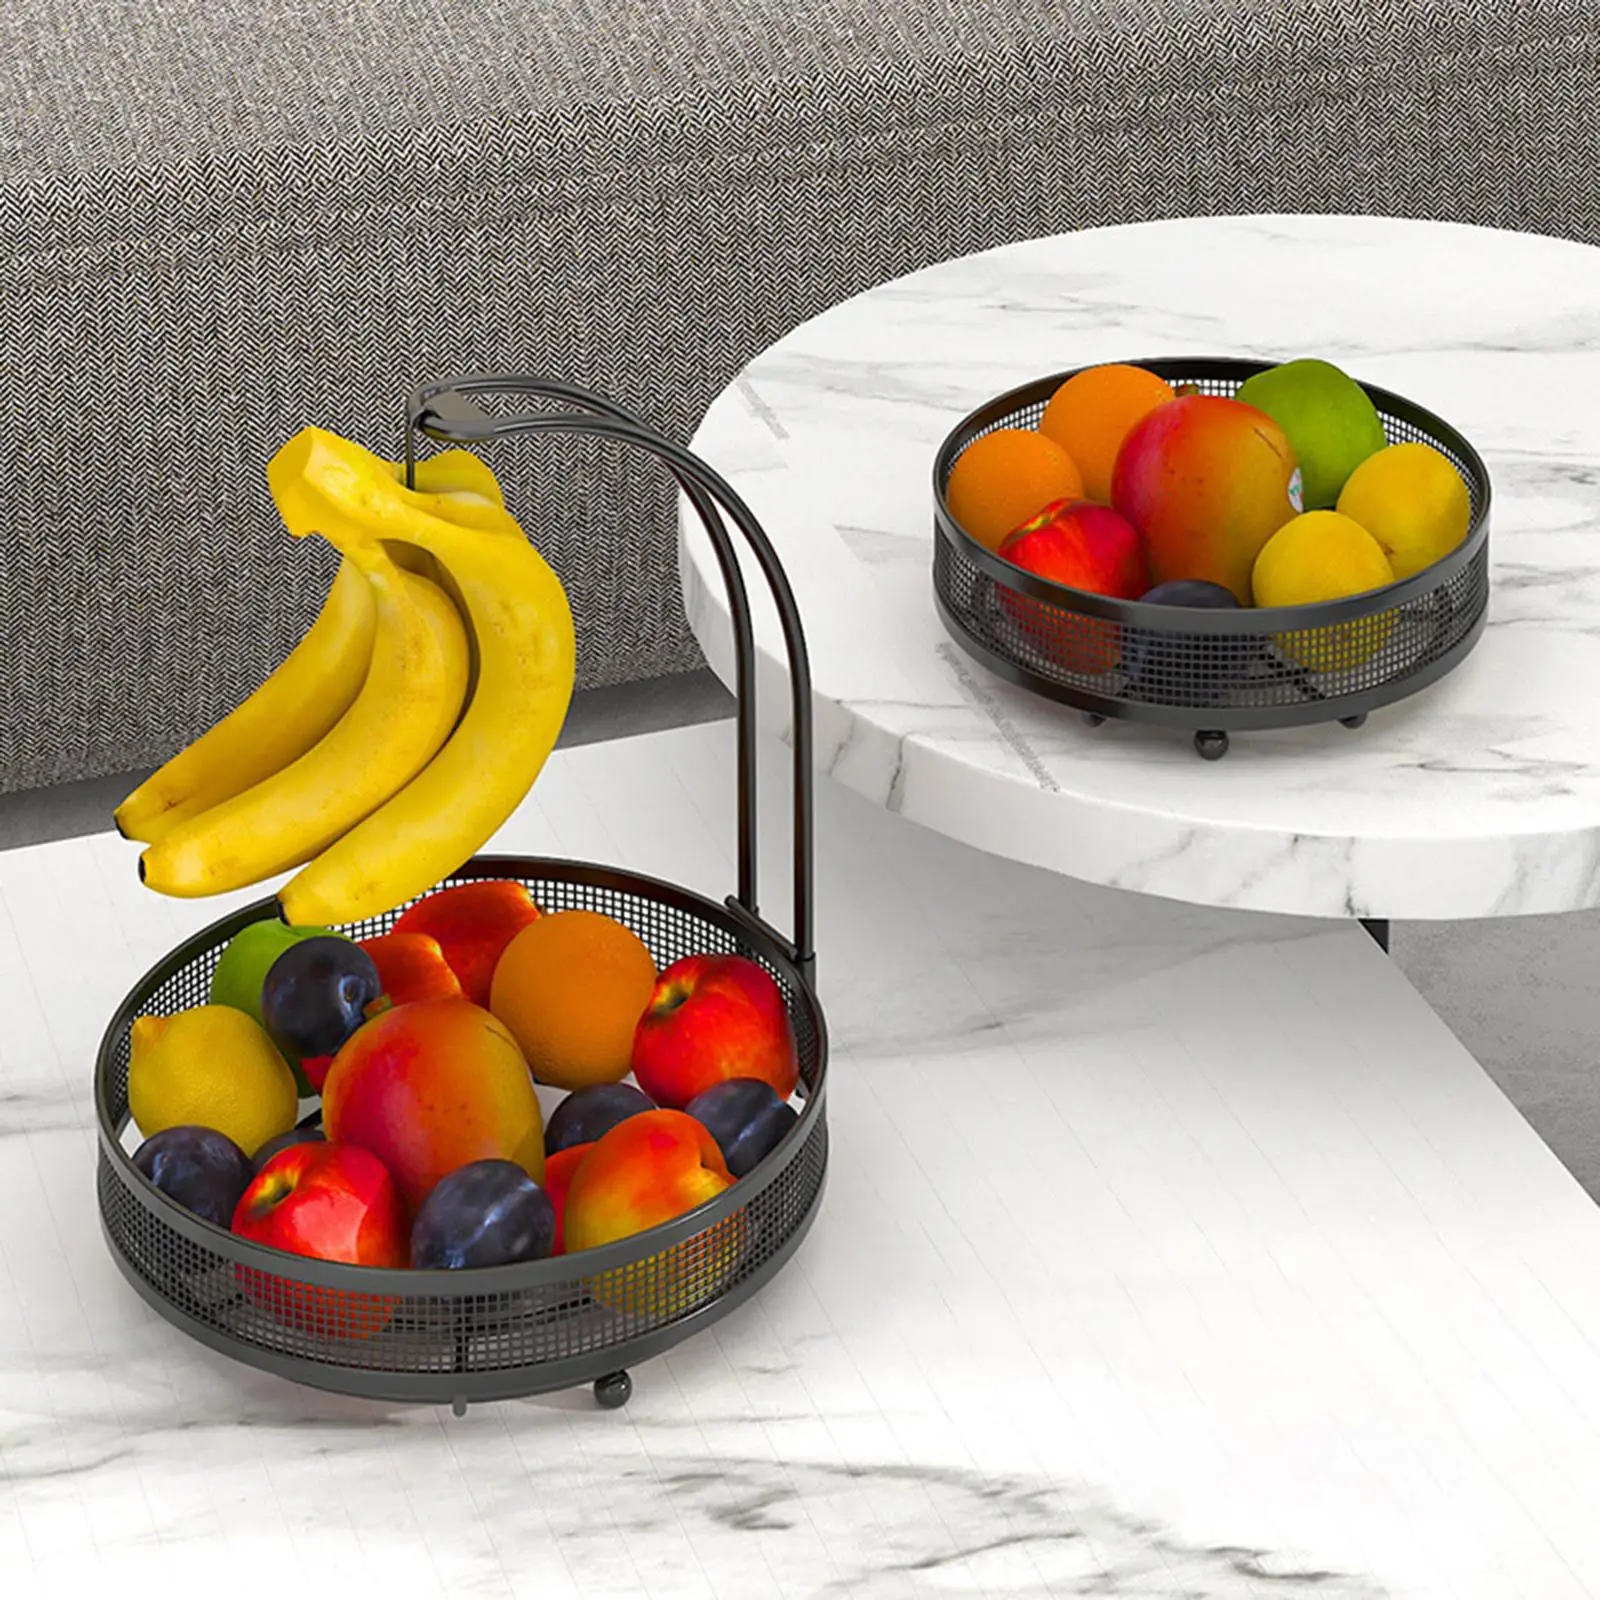 Metal 2 Tier Fruit Basket with Banana Hanger for Kitchen Multifunction Fruit Vegetable Storage Holder Display for Produce Bread